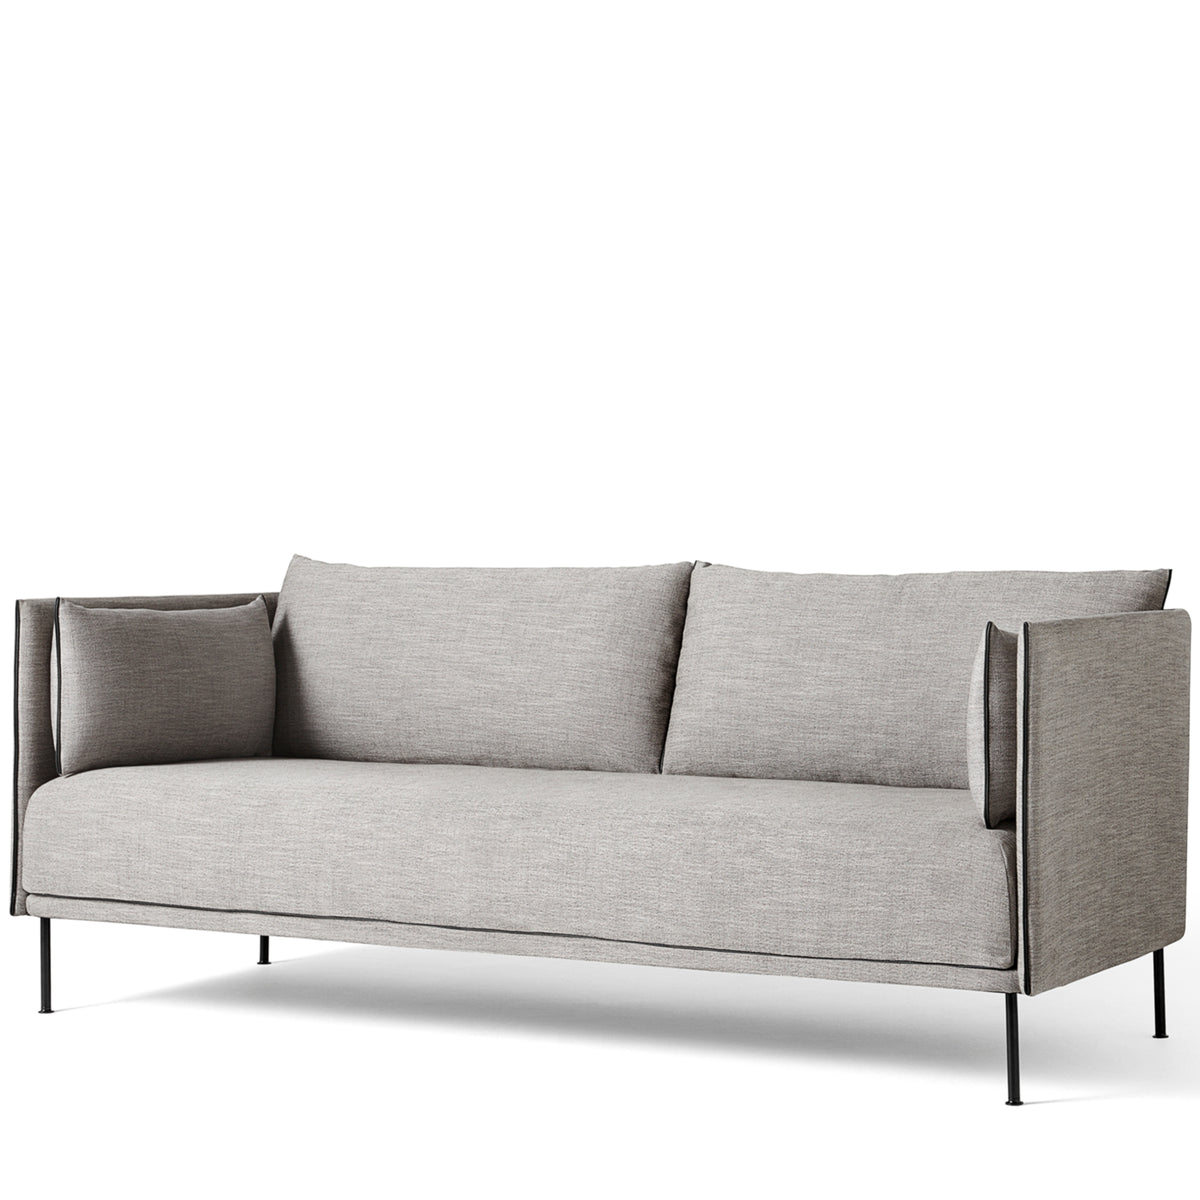 HAY Office Silhouette Sofa 2 Seater - Steel Leg Ruskin